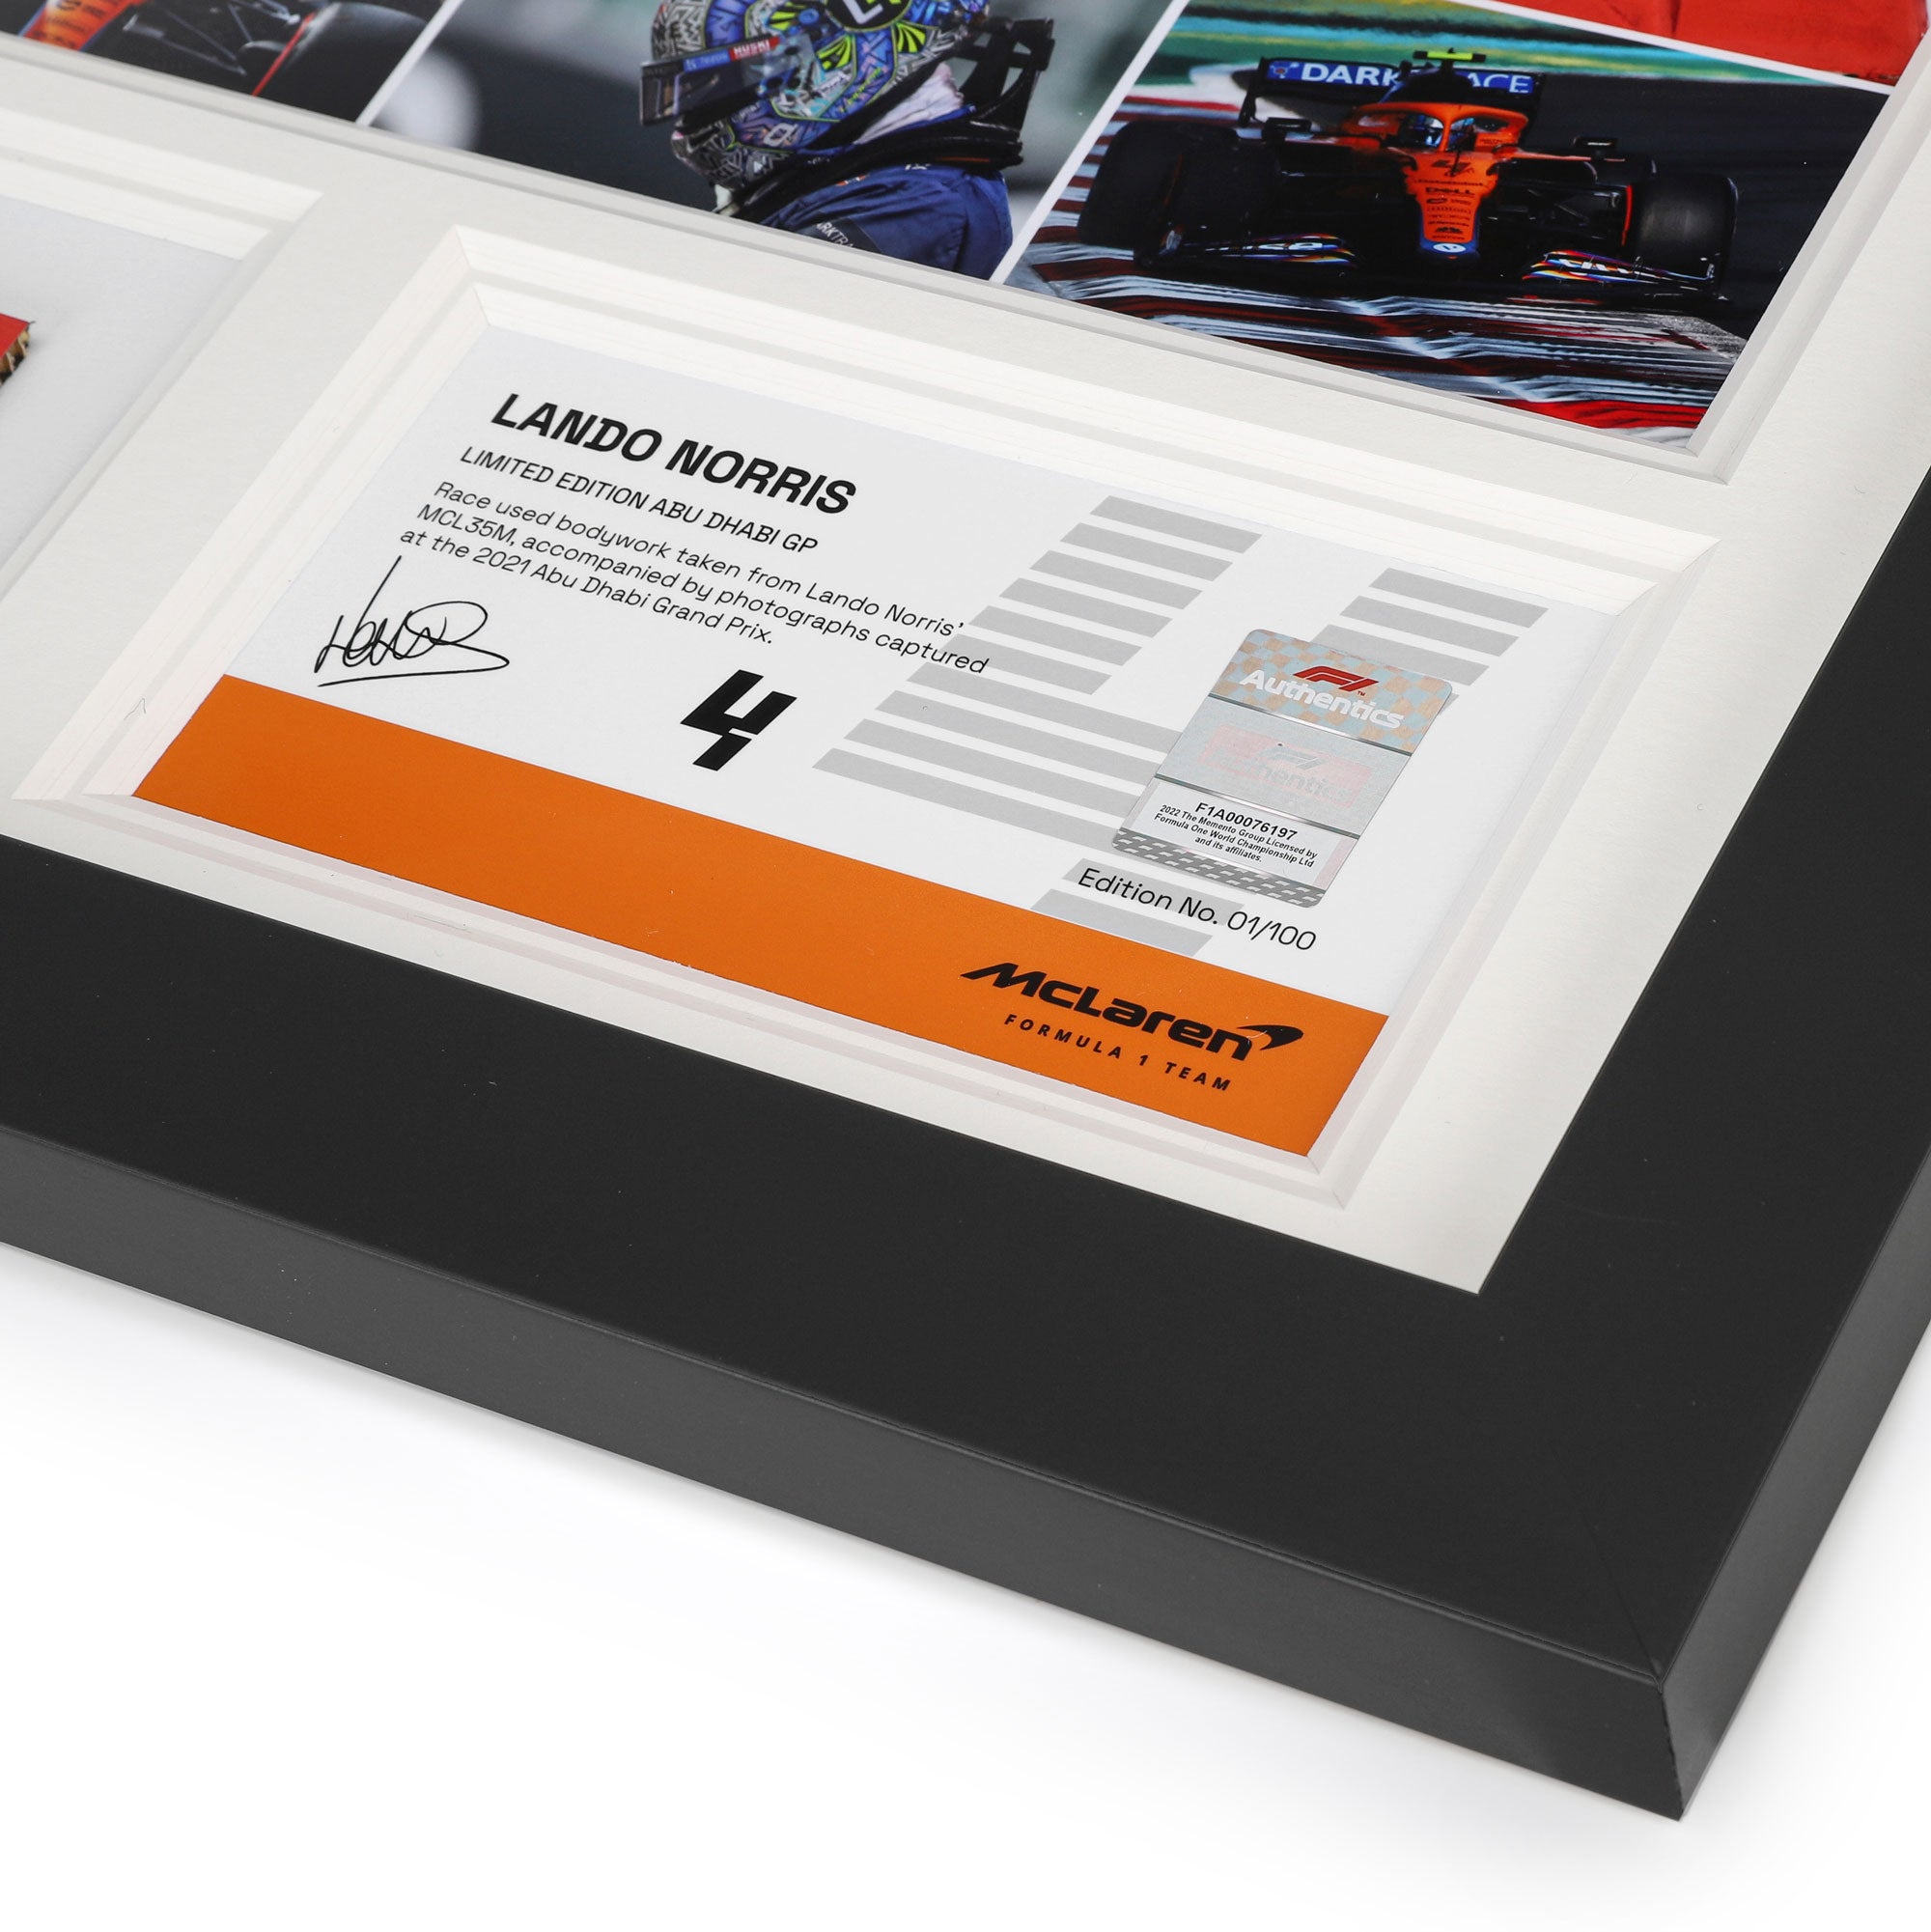 Limited Edition Lando Norris 2021 Bodywork & Photo Collage – Abu Dhabi GP